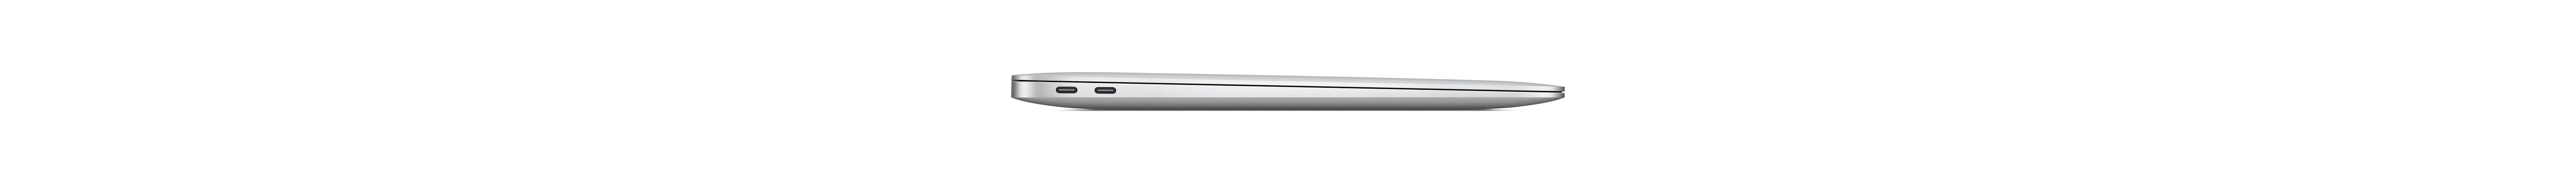 MacBook Air 13 (M1 2020) 8GB 256GB SSD Silver, Цвет: Silver / Серебристый, Жесткий диск SSD: 256 Гб, Оперативная память: 8 Гб, изображение 3